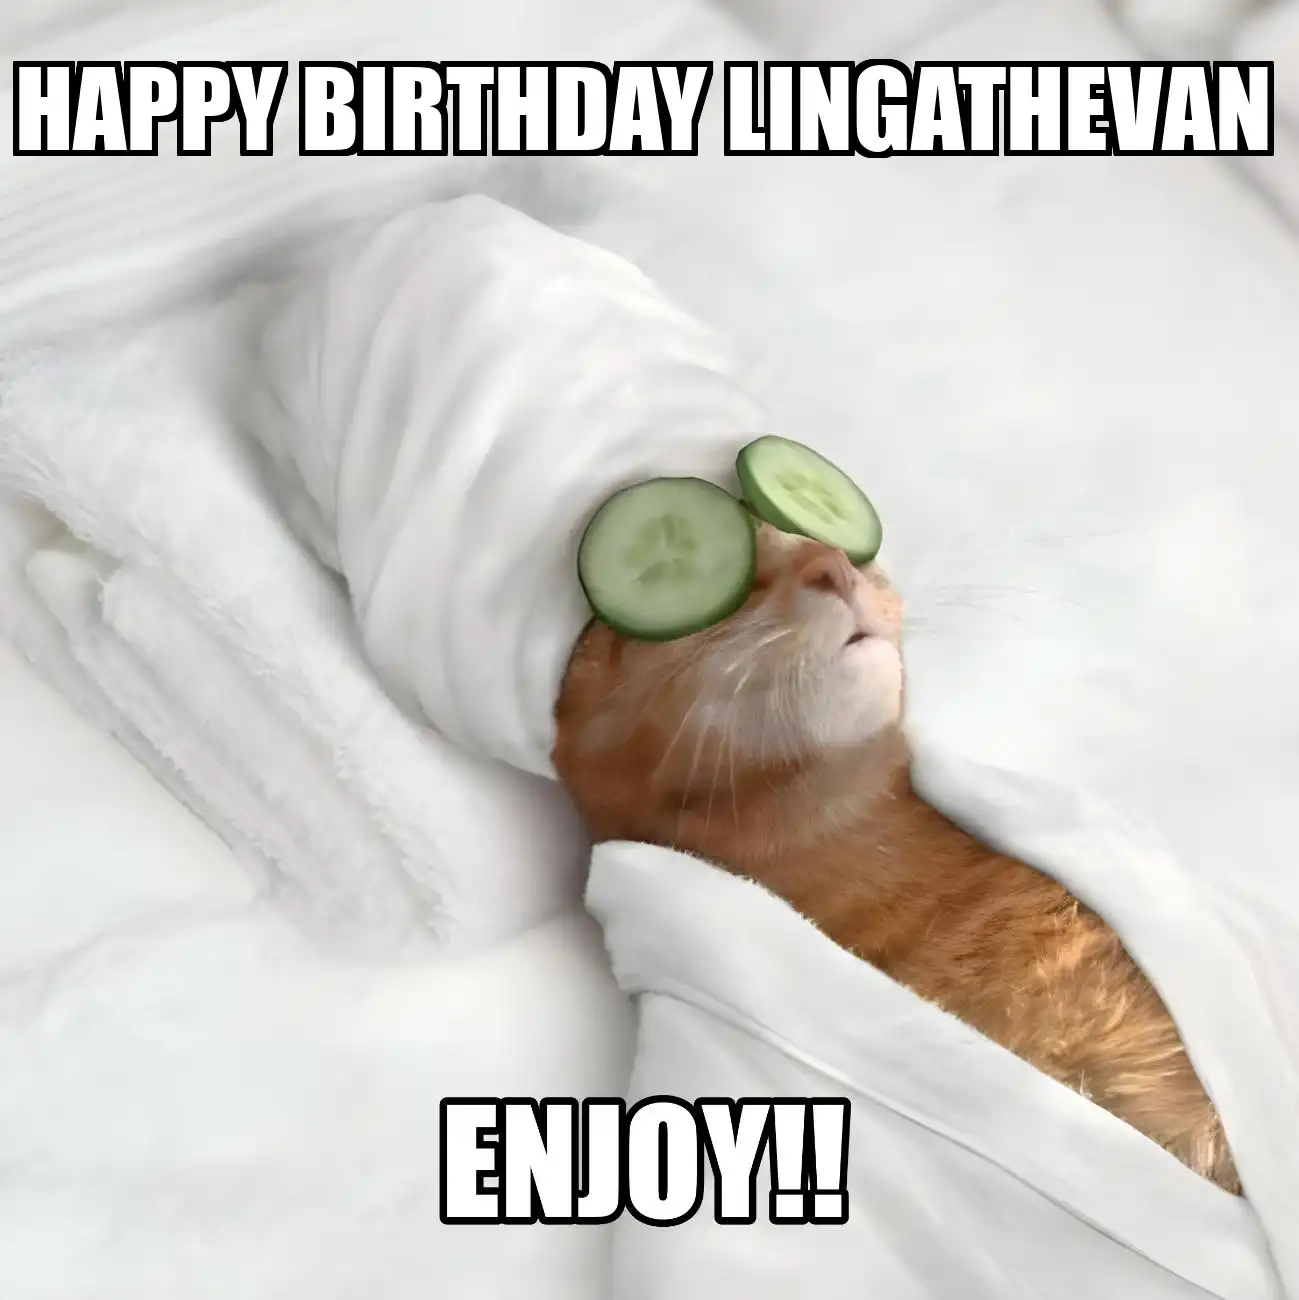 Happy Birthday Lingathevan Enjoy Cat Meme